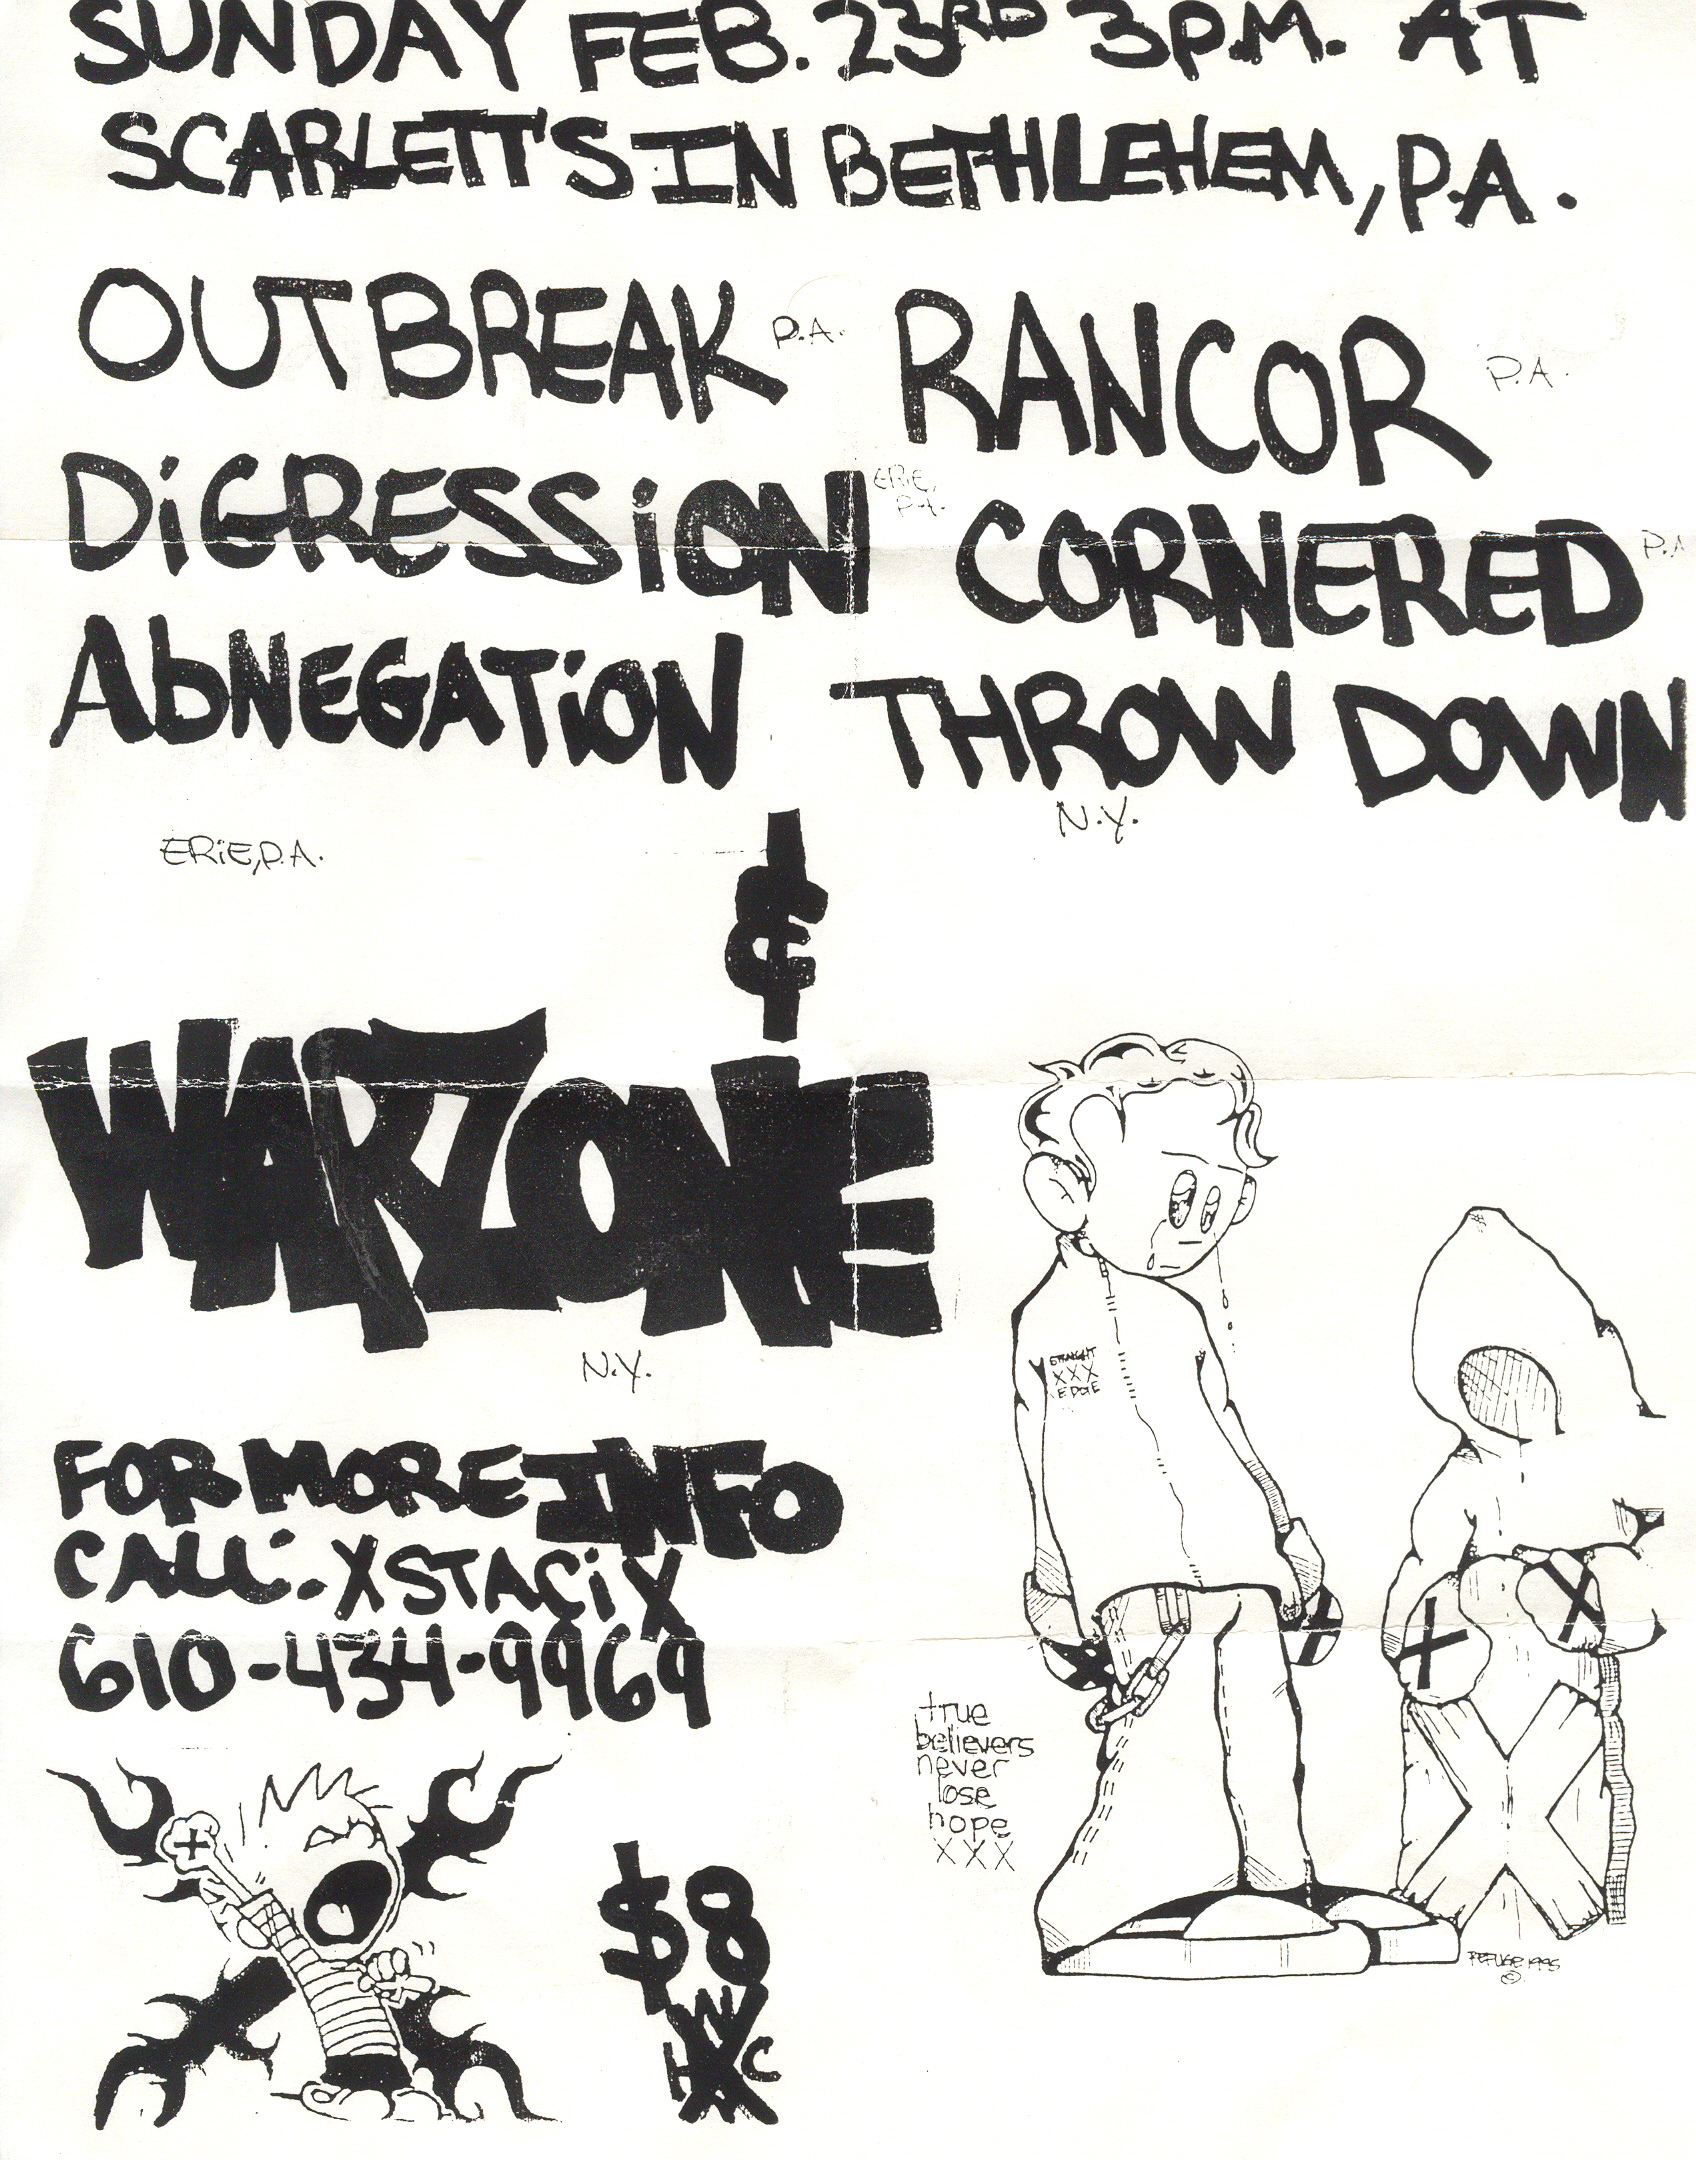 War Zone-Outbreak-Rancor-Digression-Cornered-Abnegation-Throwdown @ Scarlett’s Bethlehem PA 2-23-97